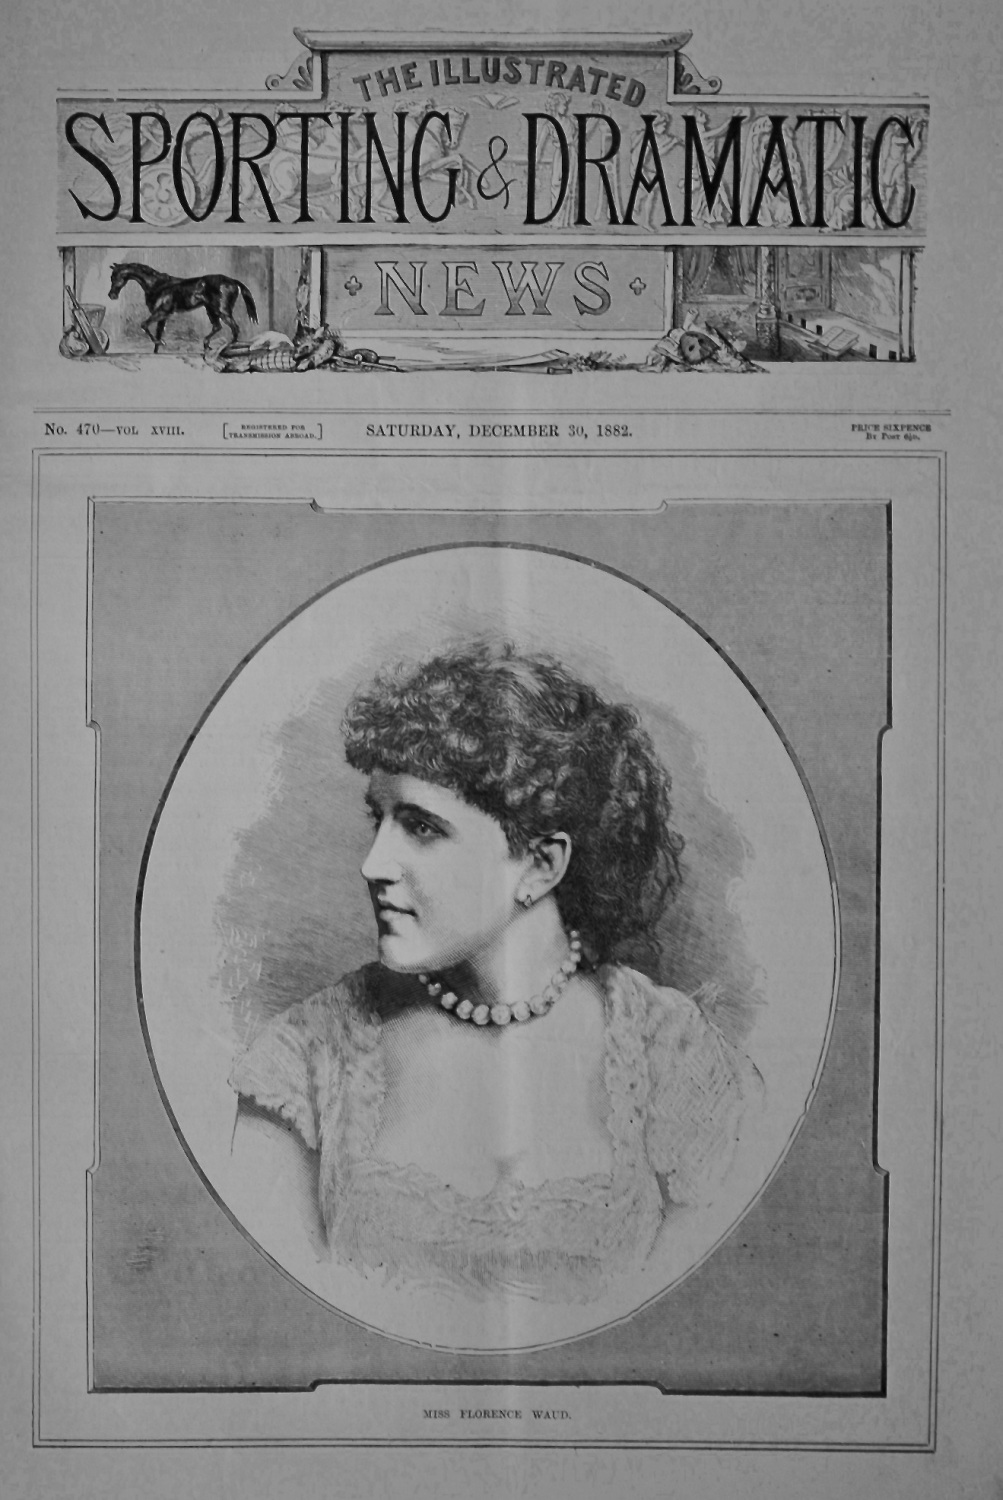 Miss Florence Waud.  1882.